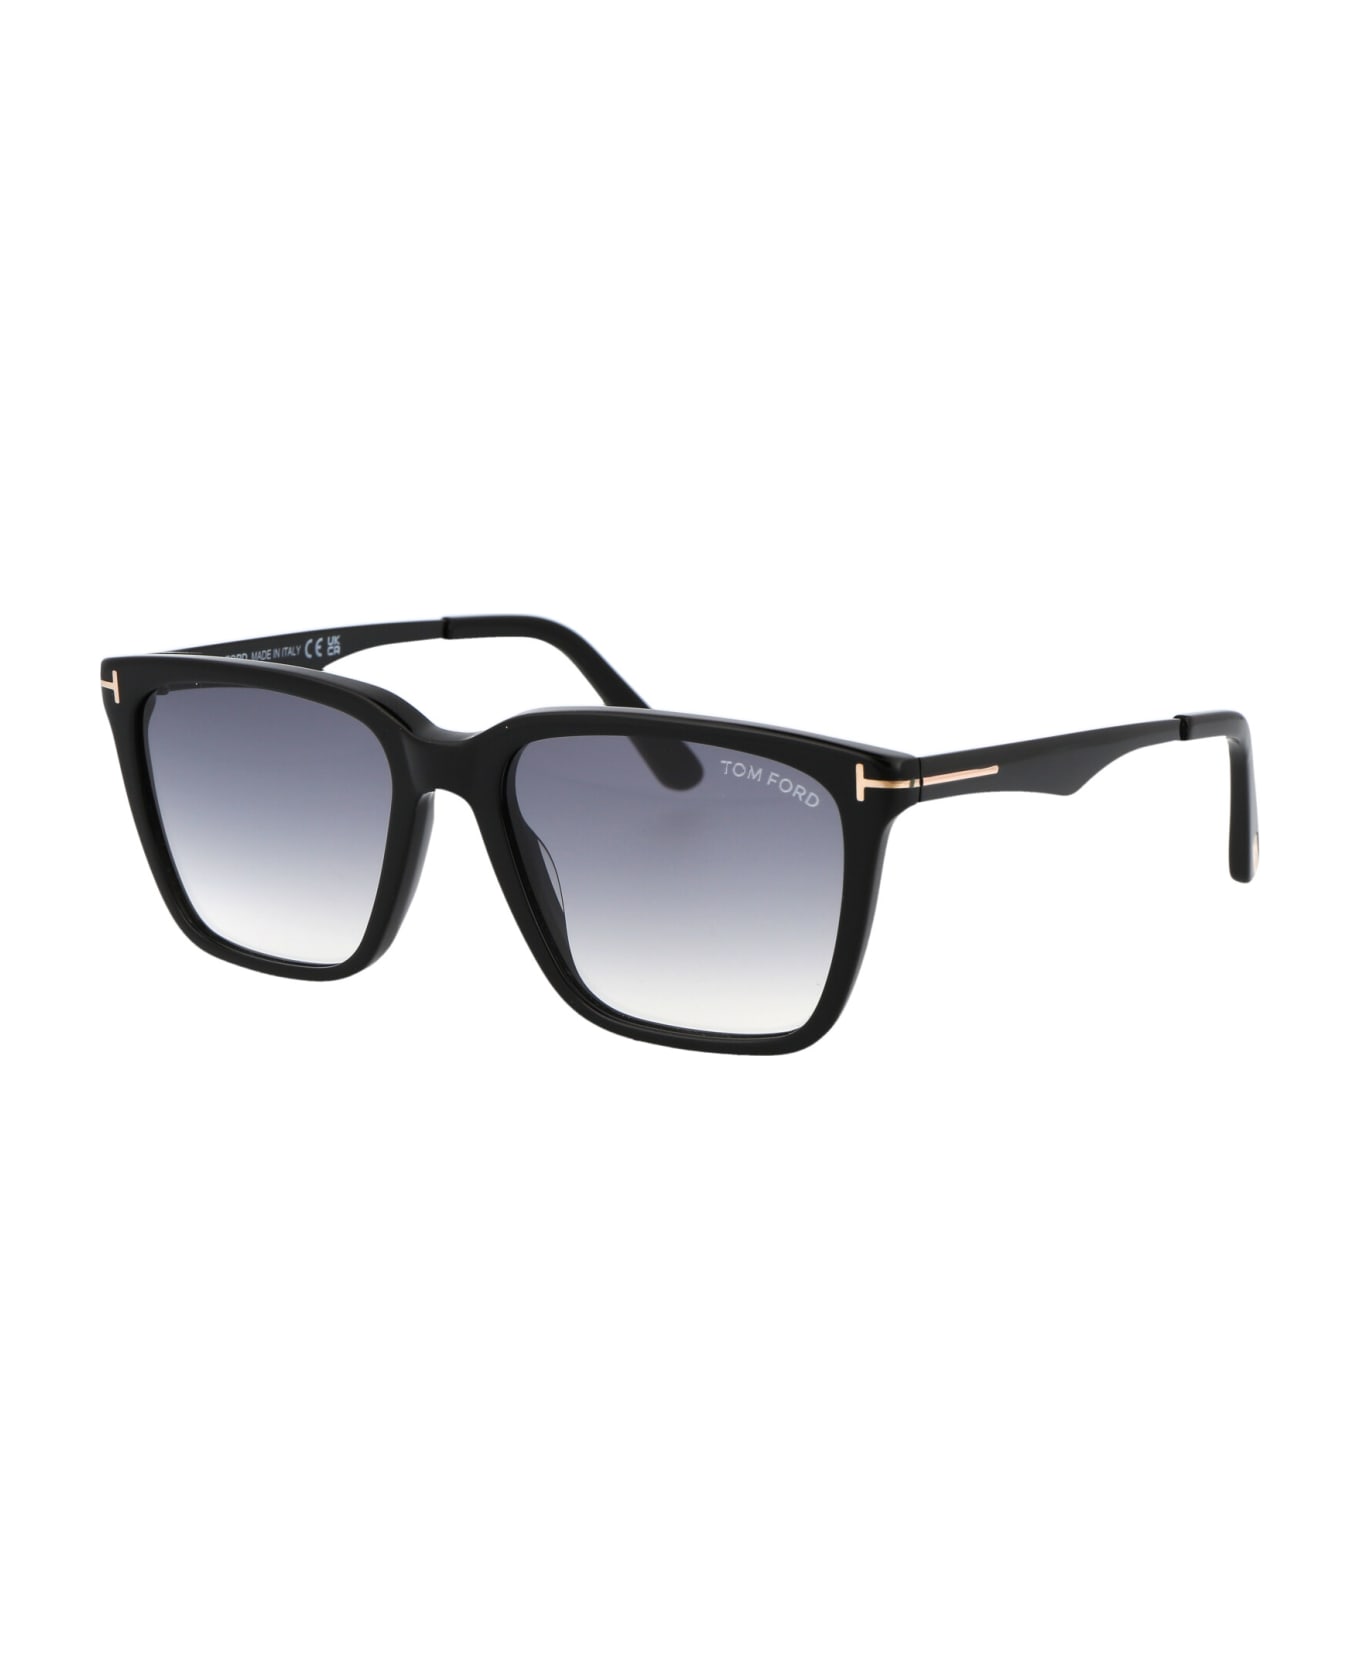 Tom Ford Eyewear Garrett Sunglasses - 01B Nero Lucido / Fumo Grad